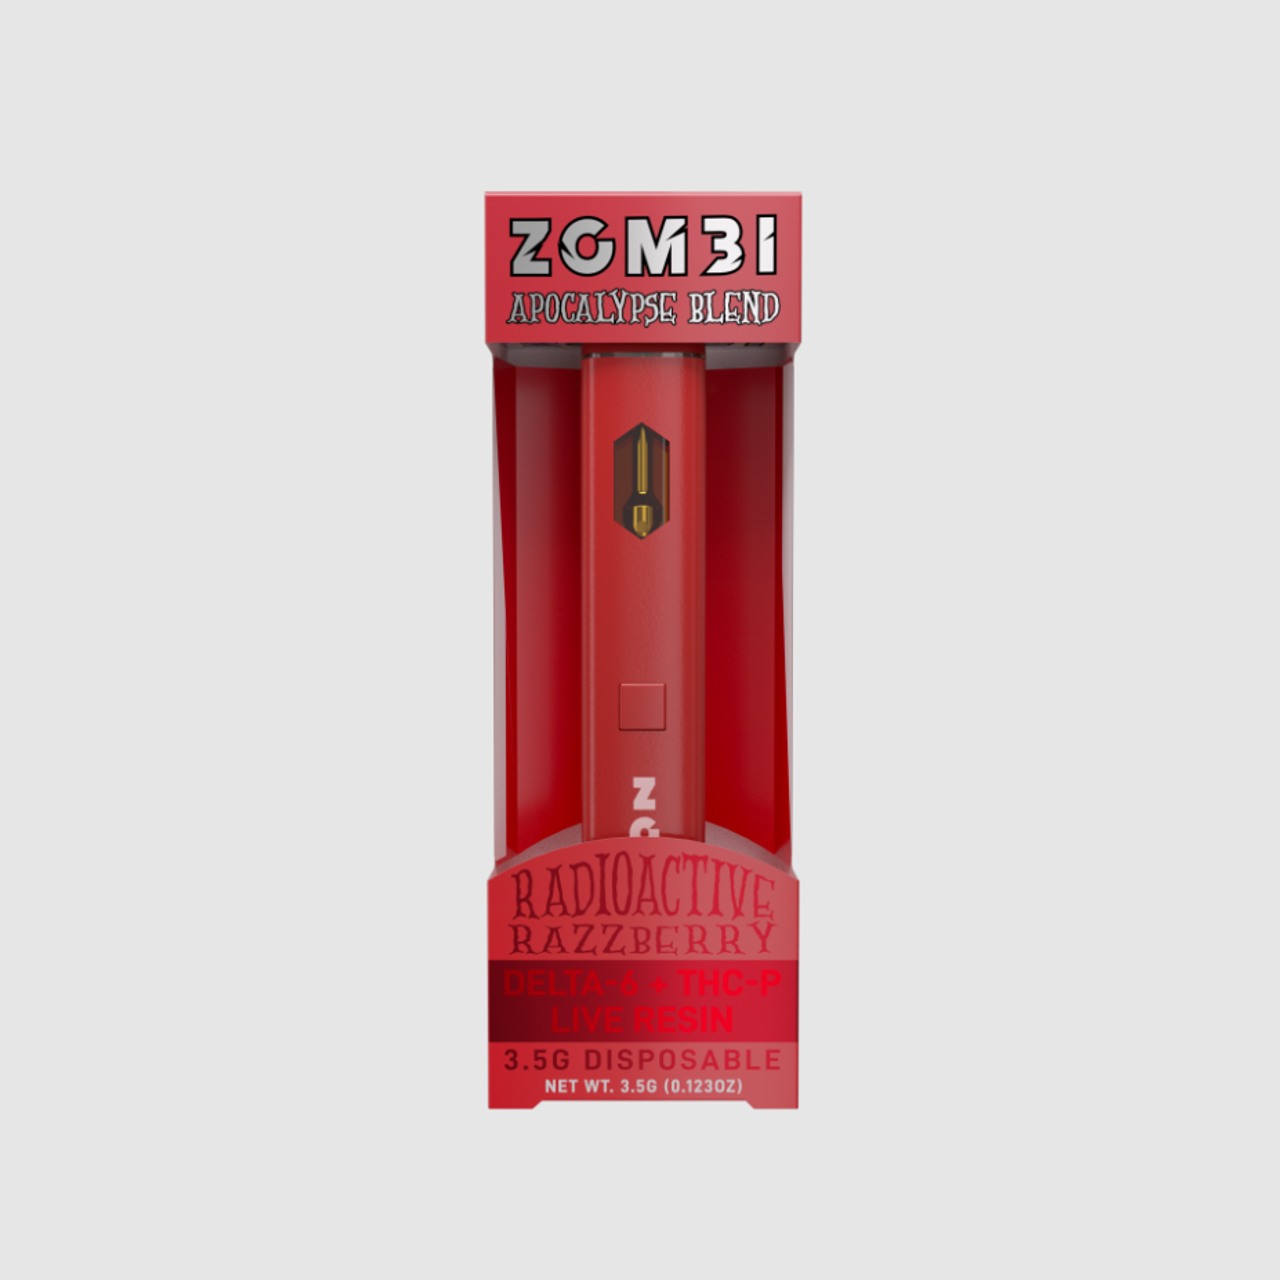 ZOMBI - Apocolypse Blend Live Resin (Delta6 + THC-P) - Hemp Disposables (3.5g x 6) - MK Distro